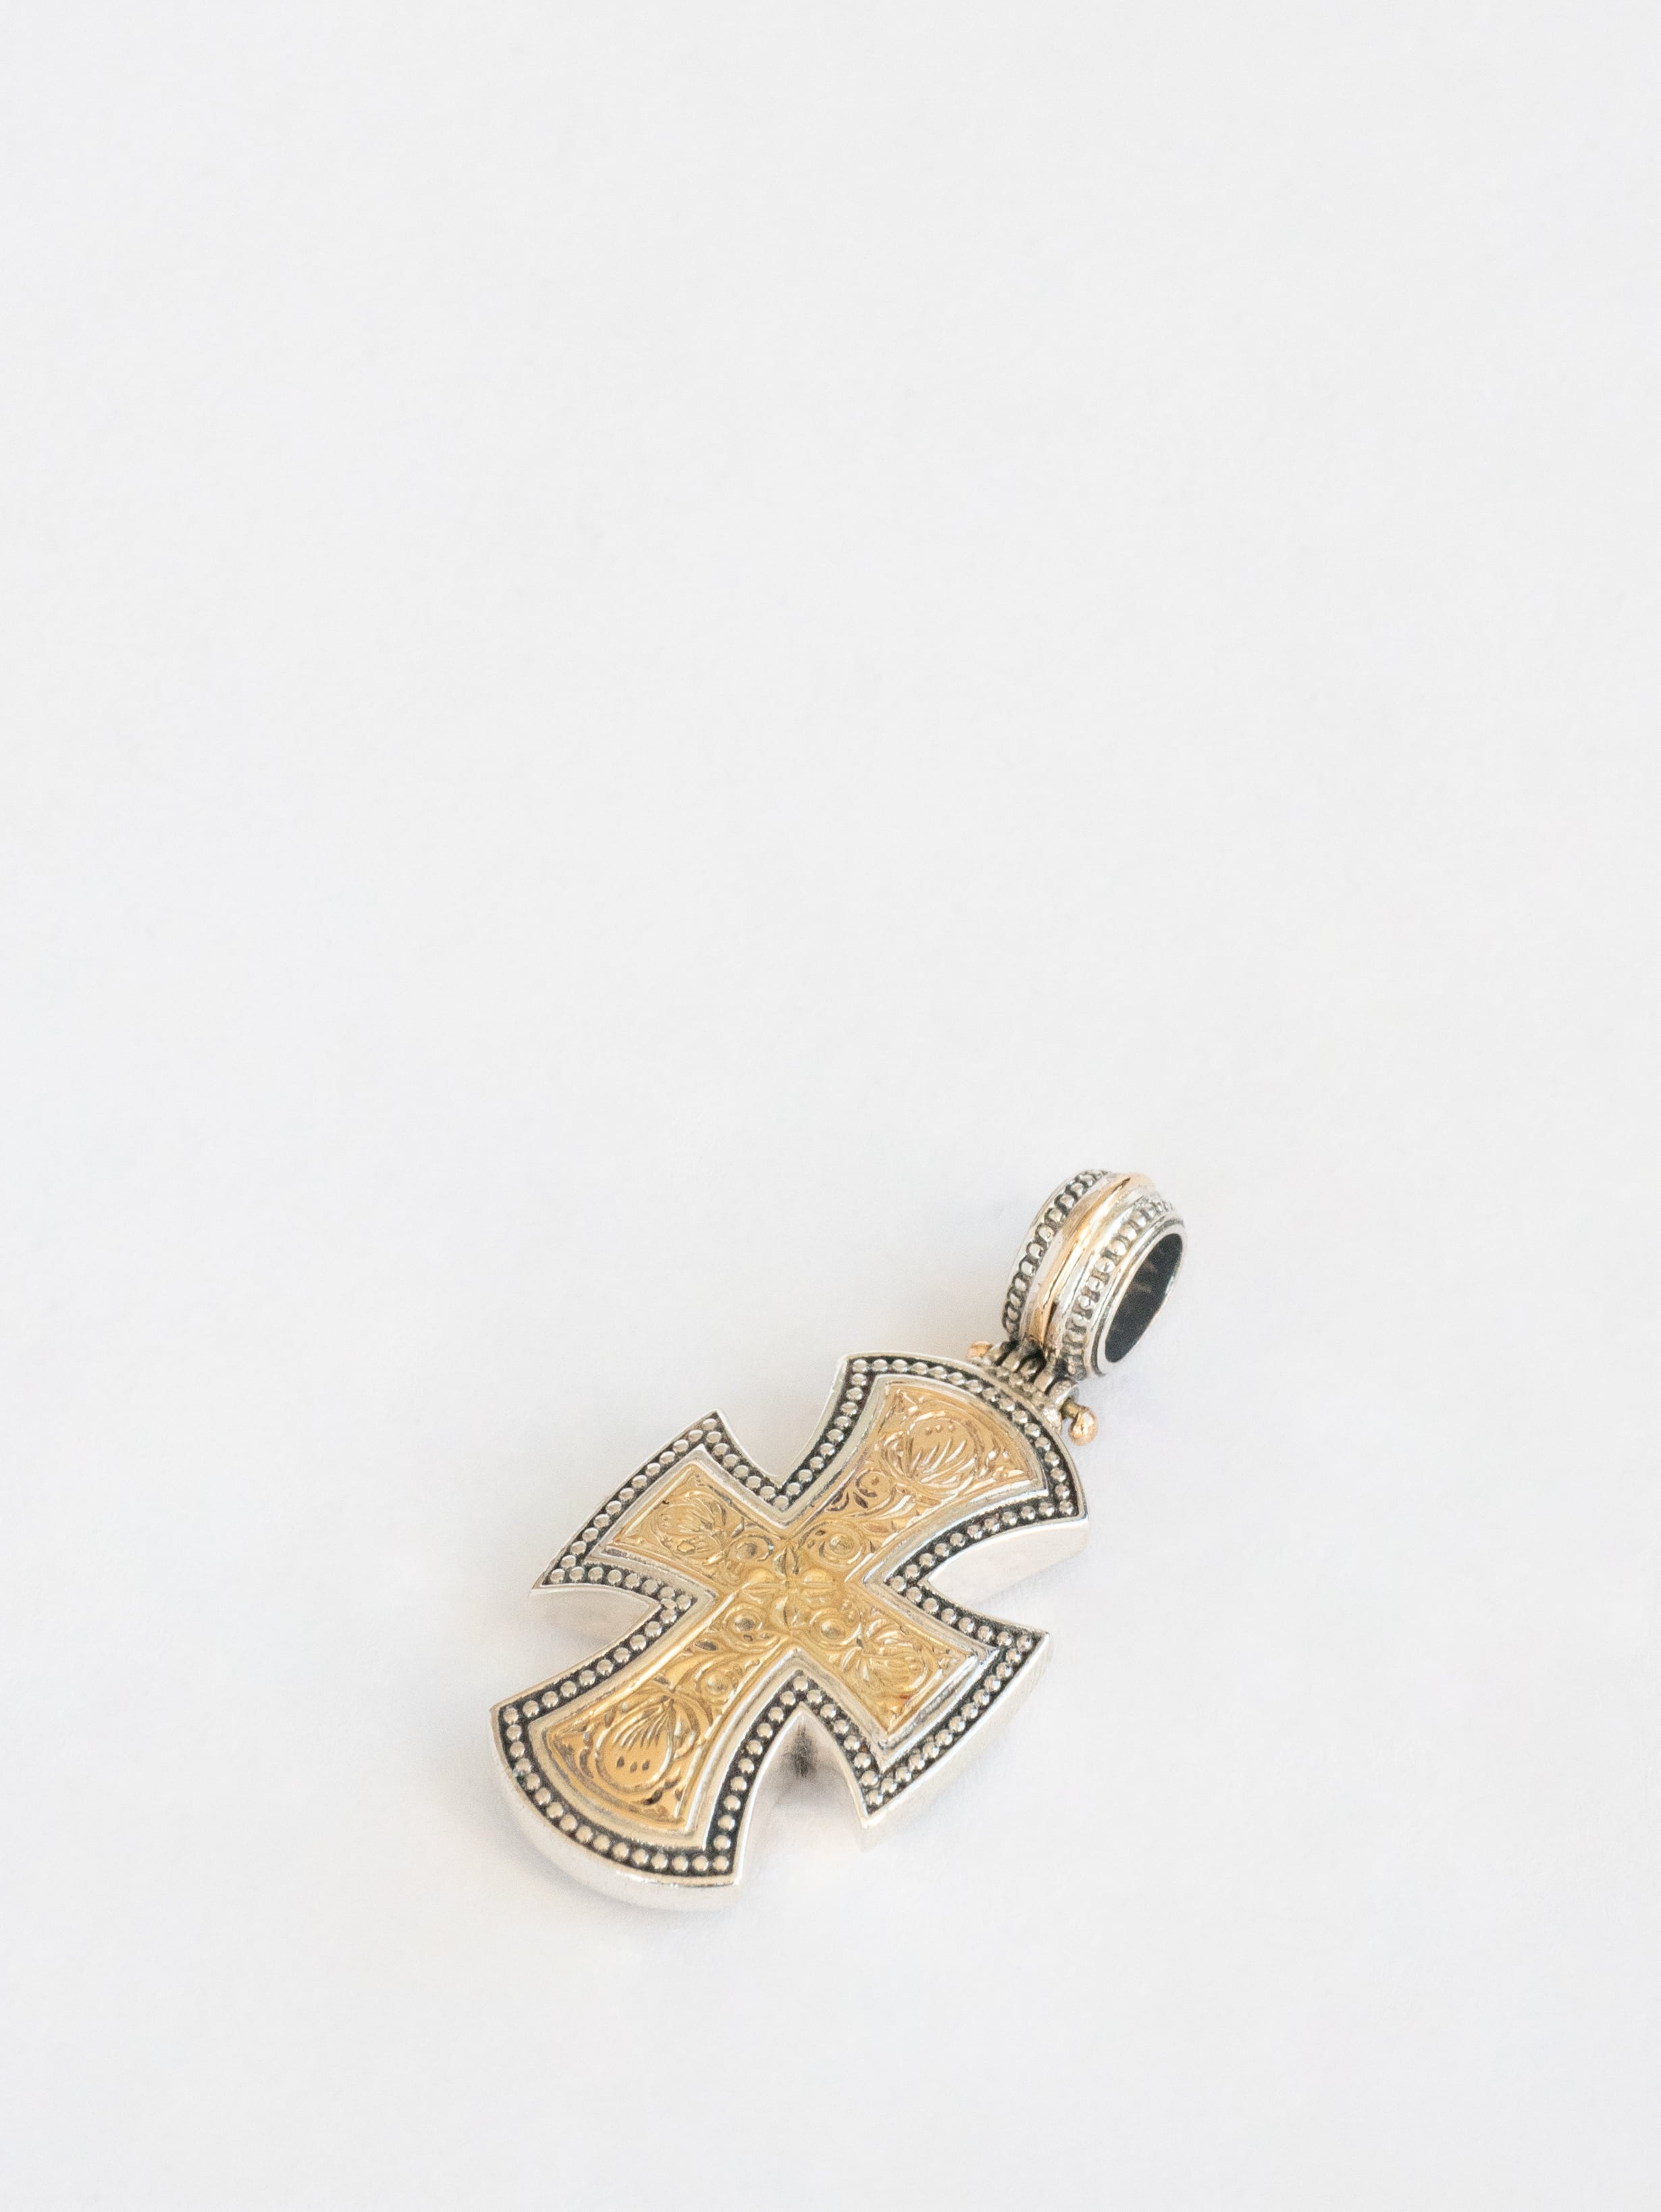 Maltese Patmos Cross Pendant / Gerochristo